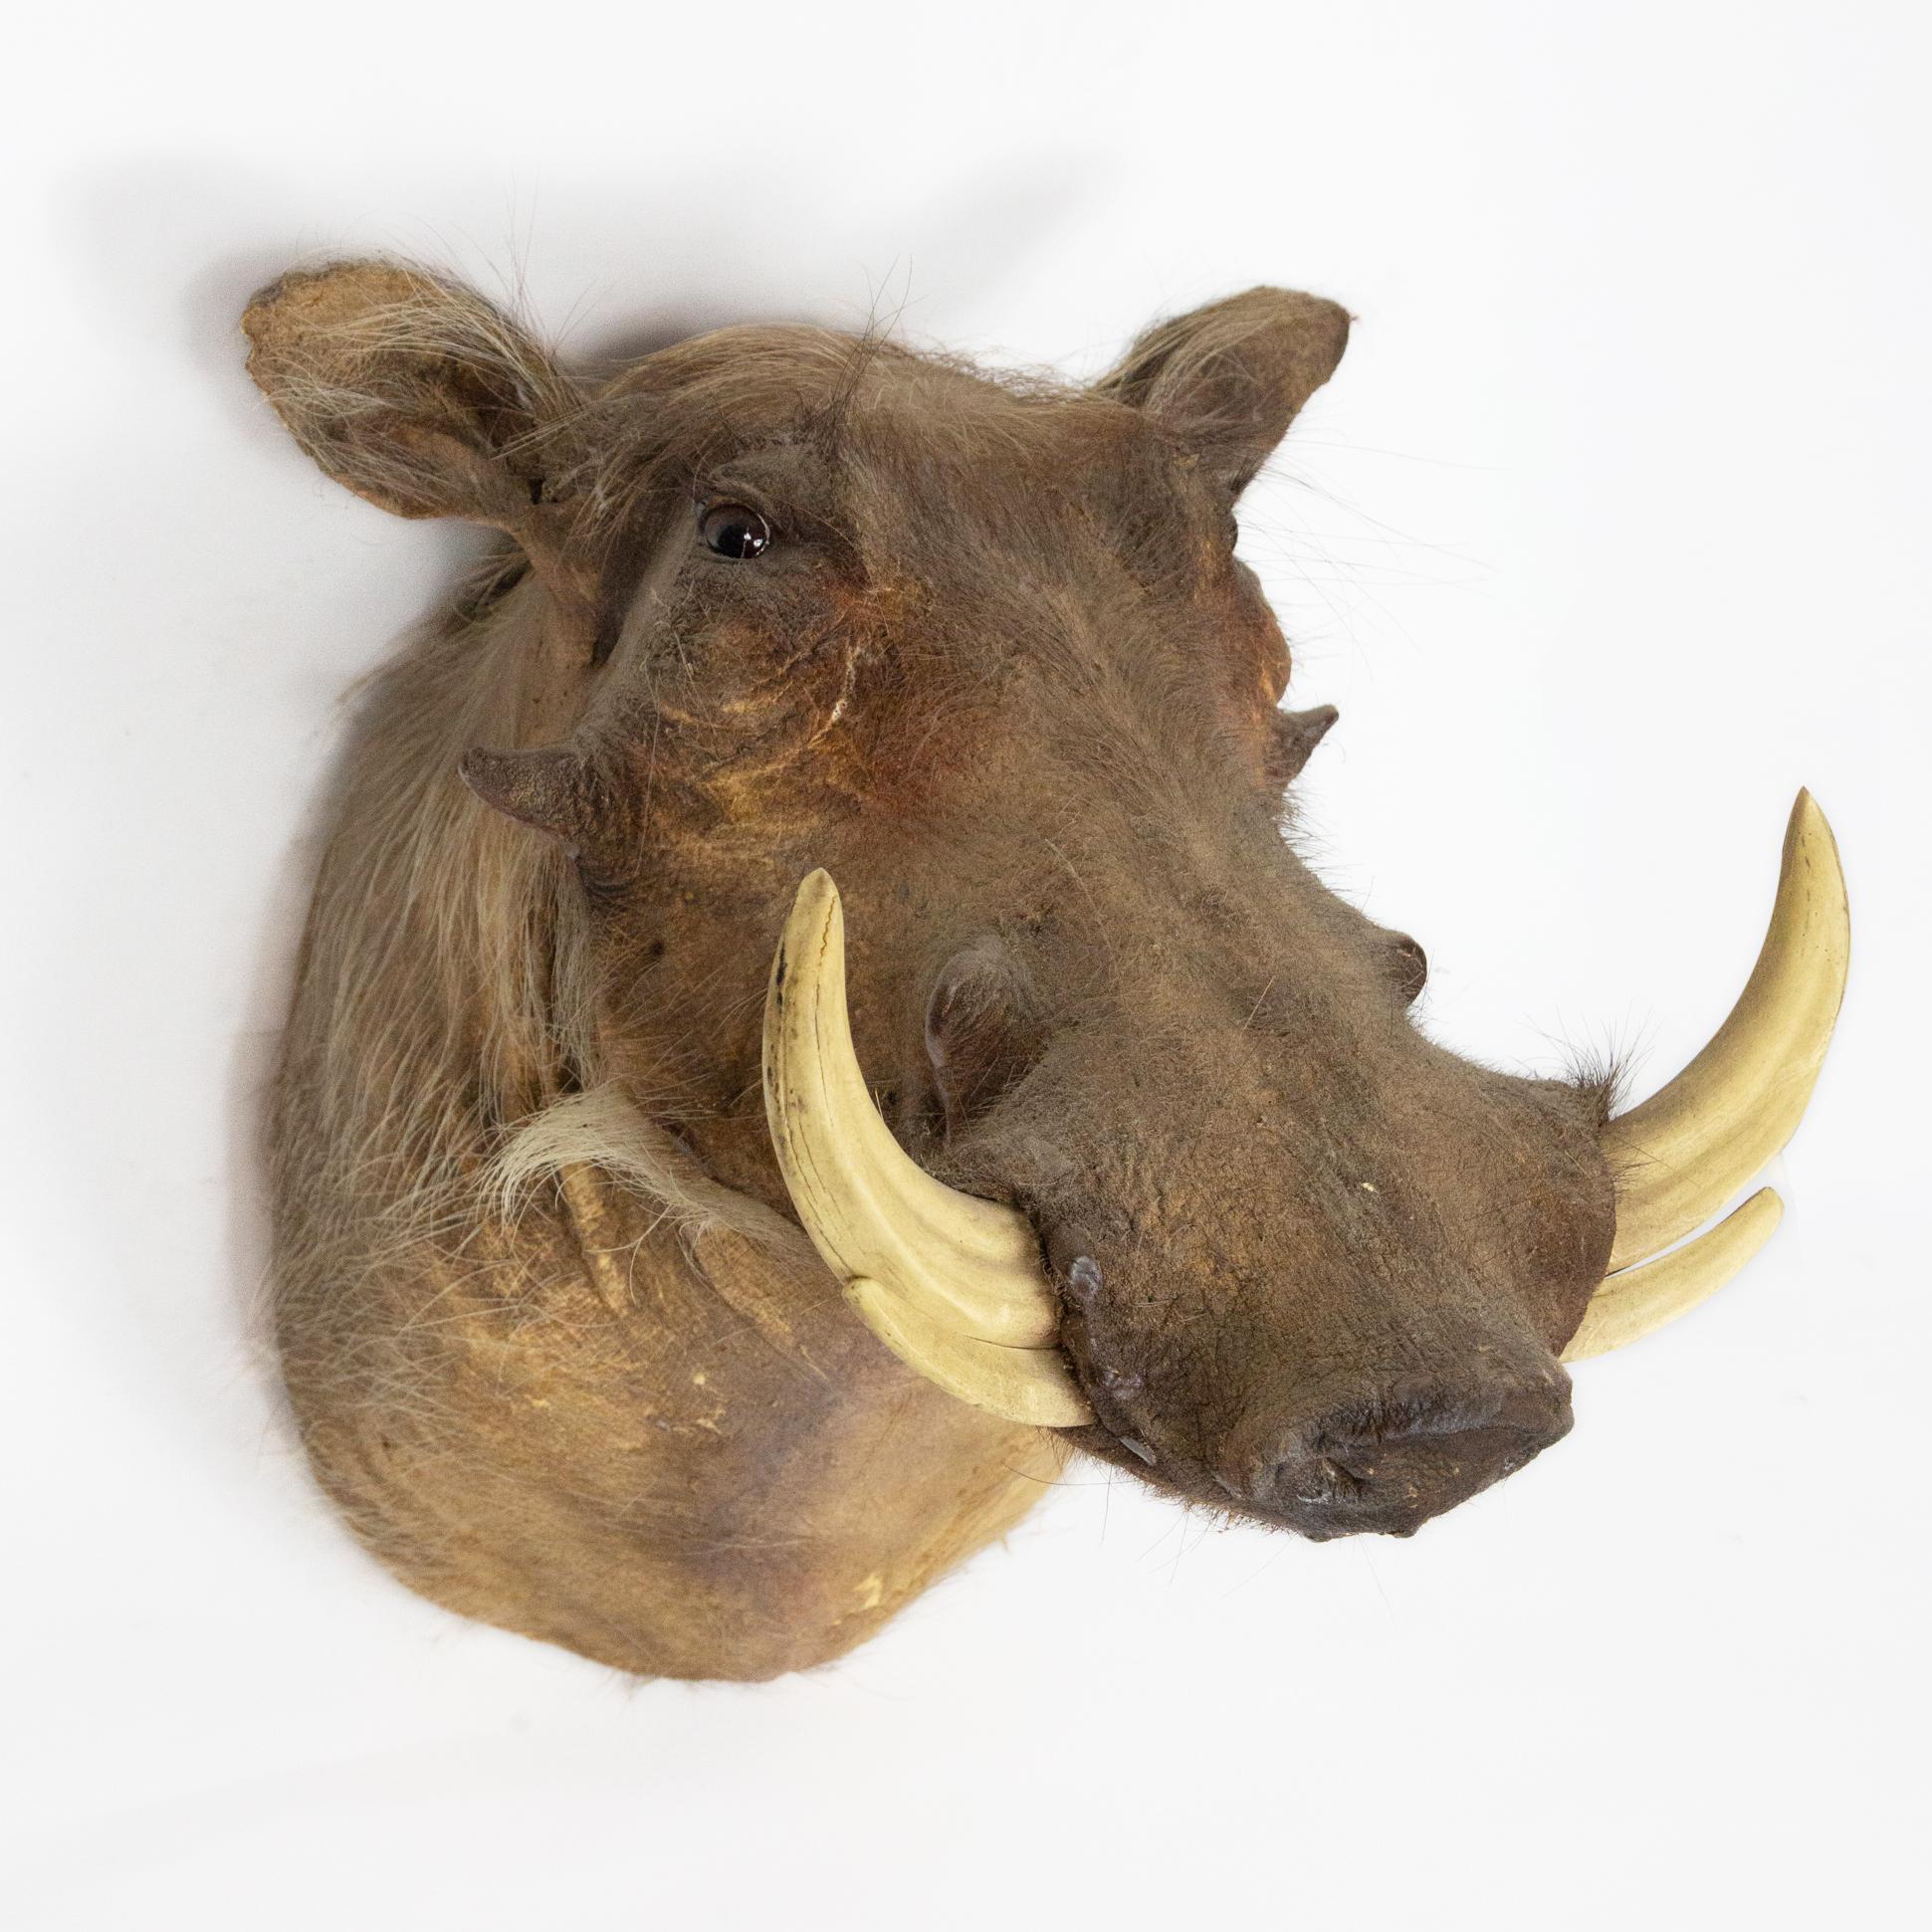 Taxidermy warthog. The warthog is a wild species of pig found in Kenya, Somalia, and Ethiopia.